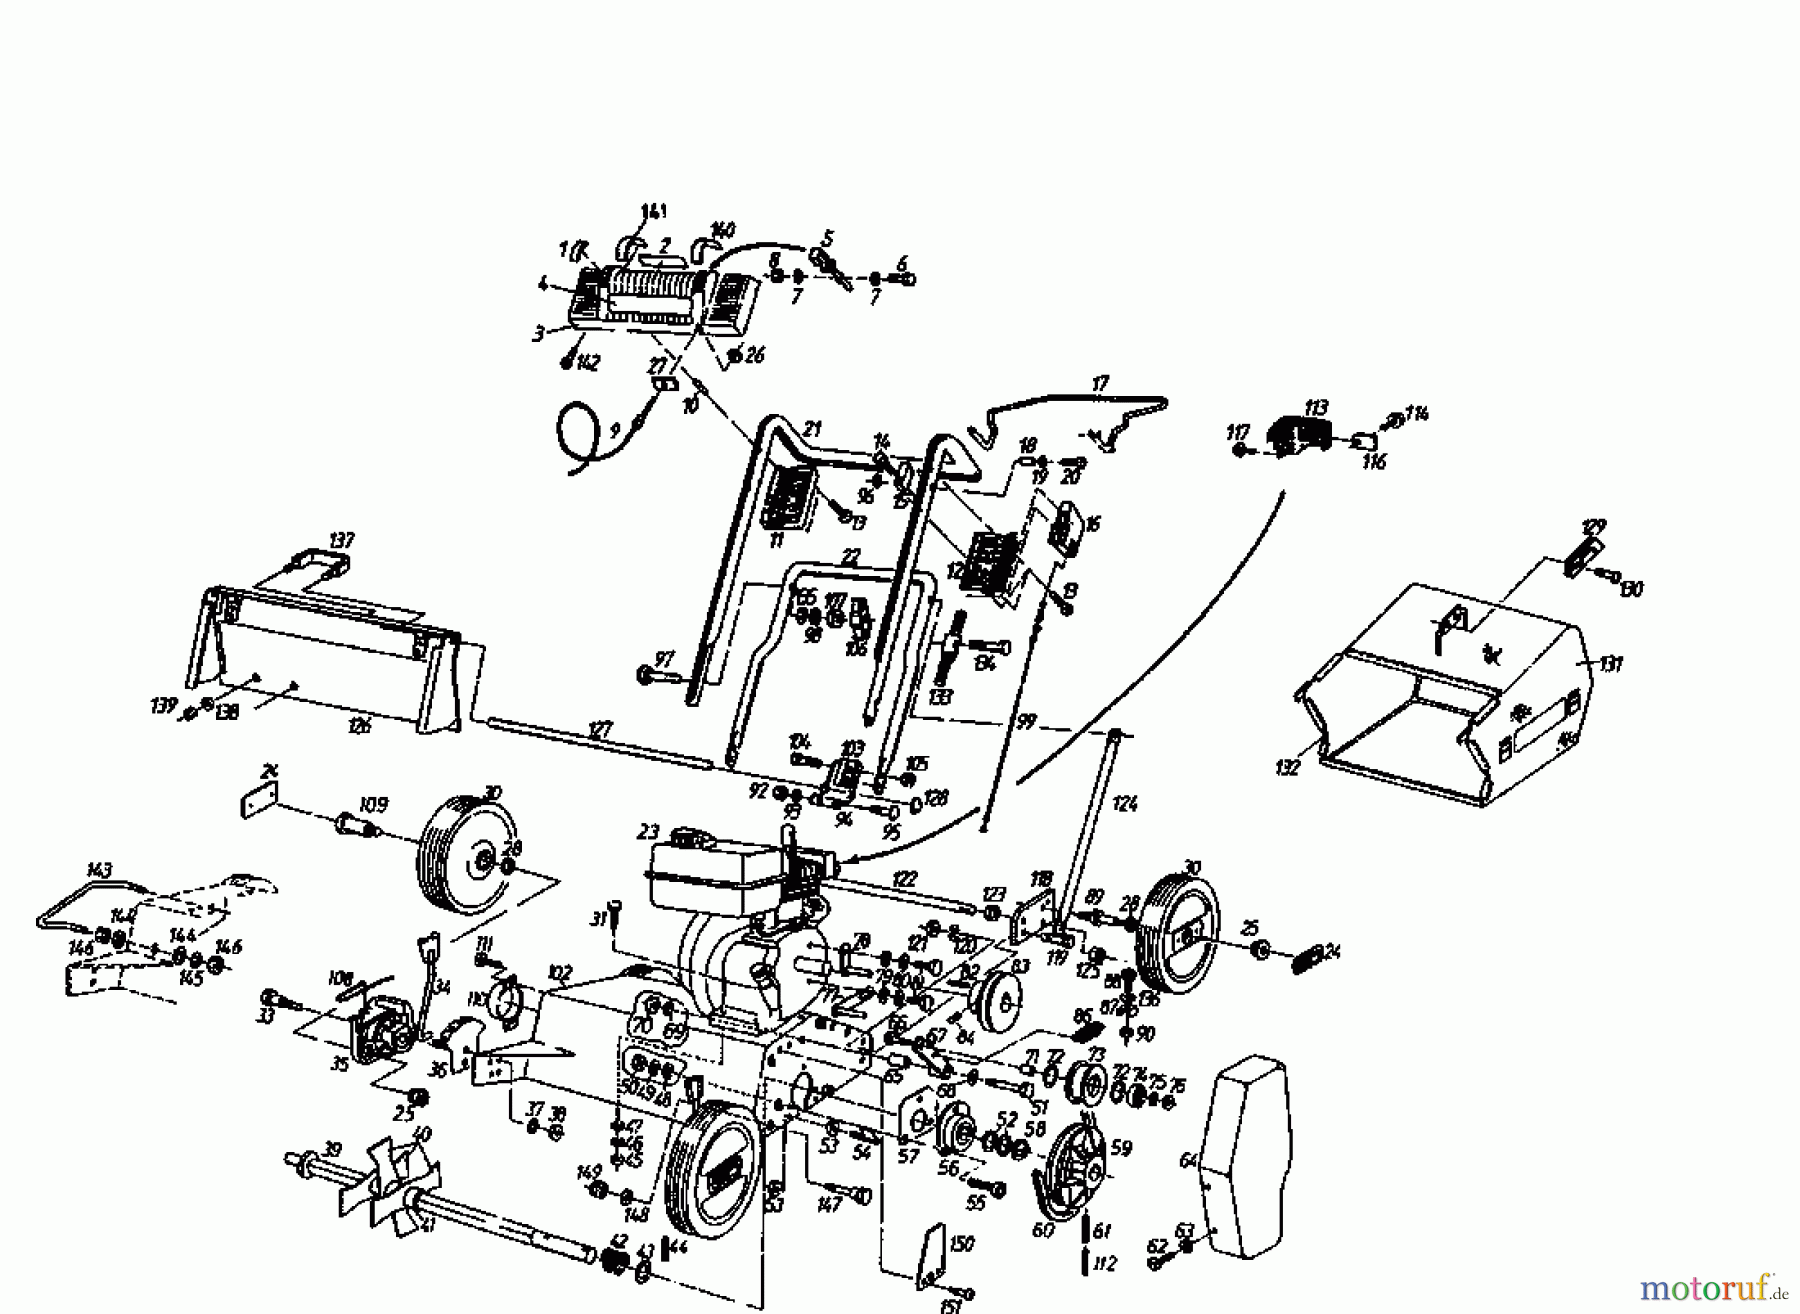  Gutbrod Petrol verticutter MV 404 04010.01  (1995) Basic machine